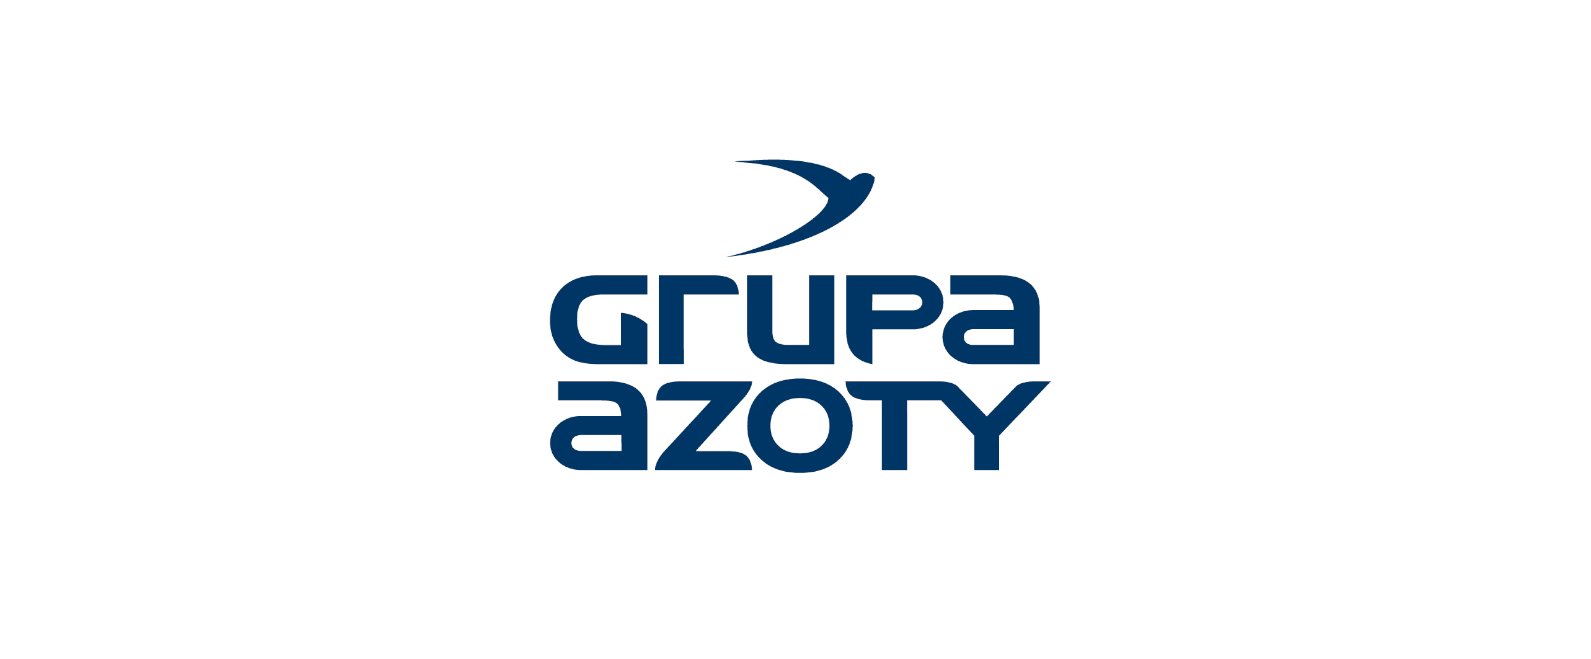 Grupa Azoty increases fertilizer production